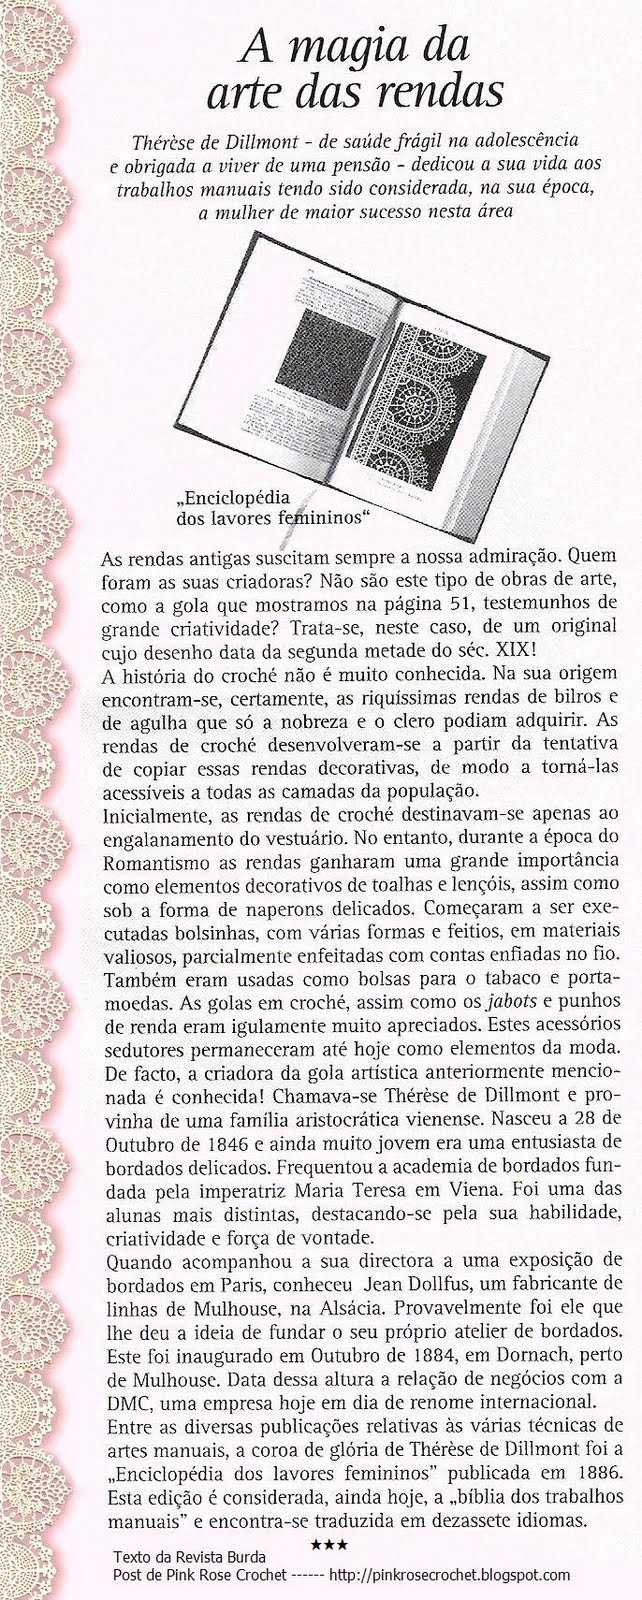 Ri3 7 Worksheets together with Pink Rose Crochet História Do Crochê